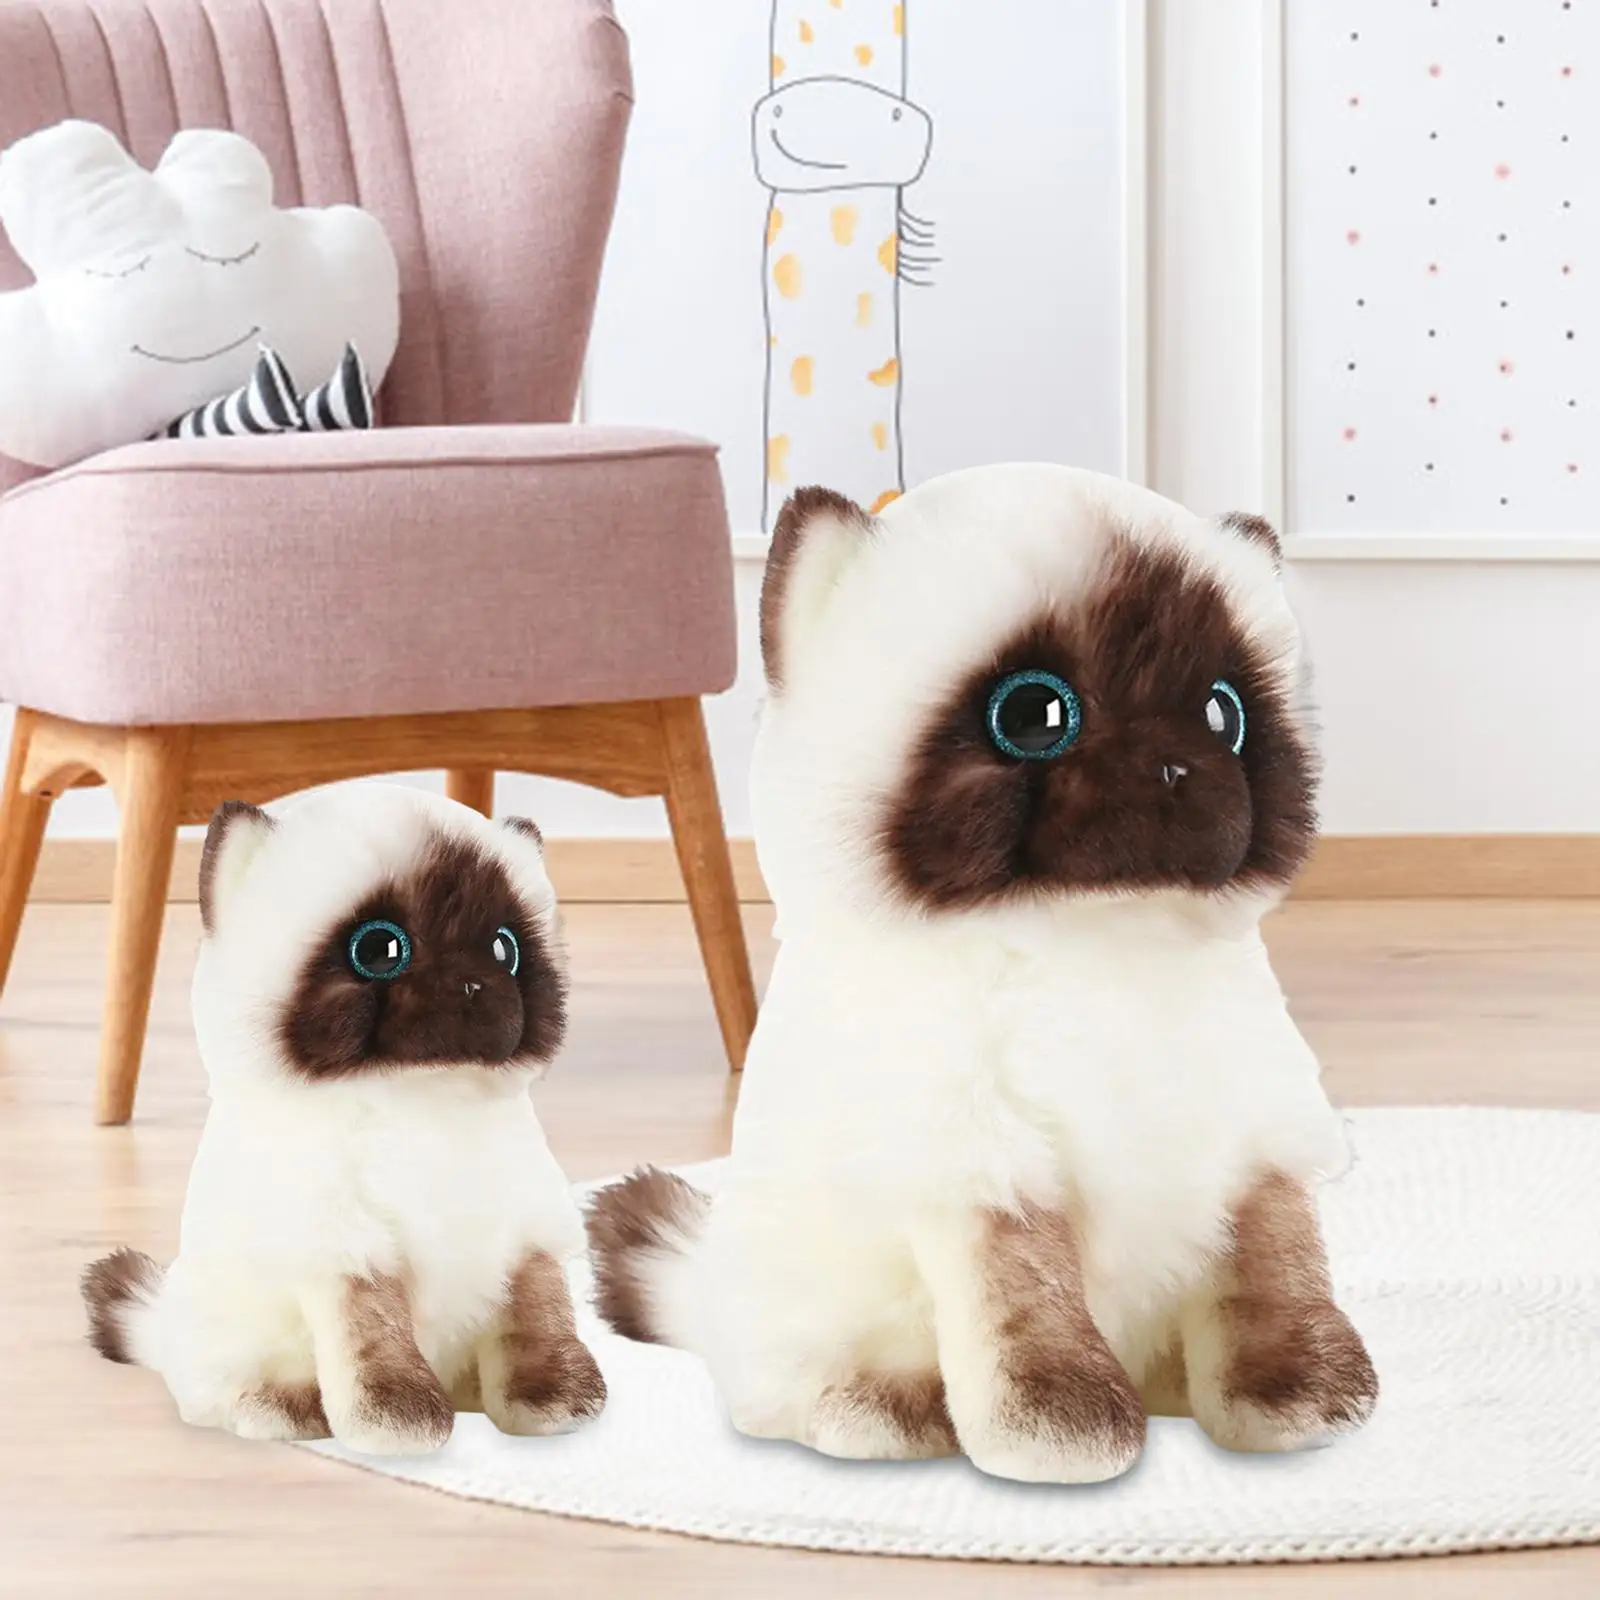 Stuffed Animal Toys Plush Pillows Cat Animal Doll for Living Room Home Decor